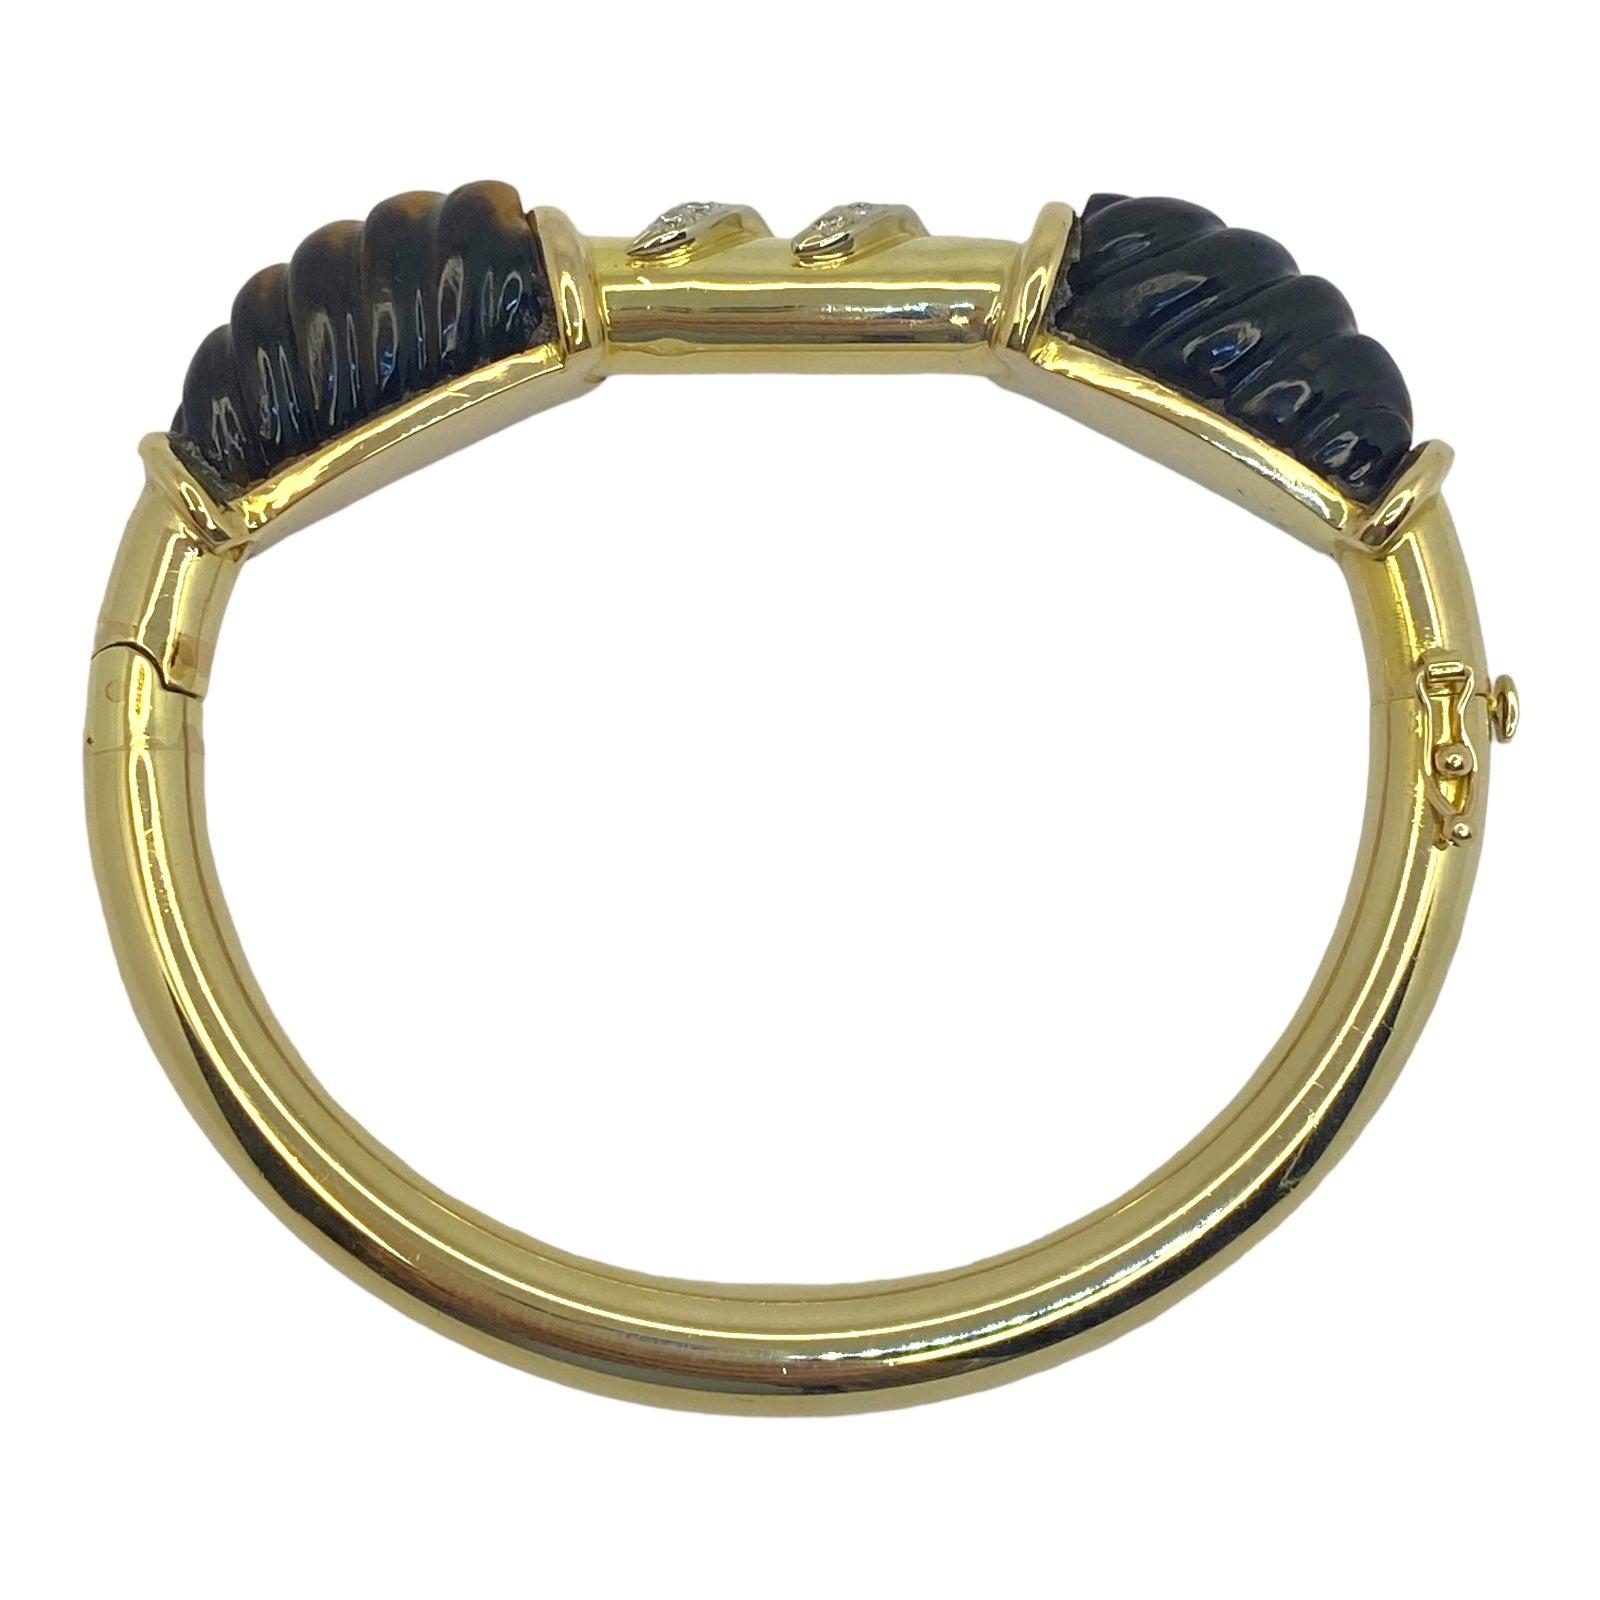 Brilliant Cut Vintage 14K Yellow Gold Tiger's Eye and Diamond Bangle Bracelet